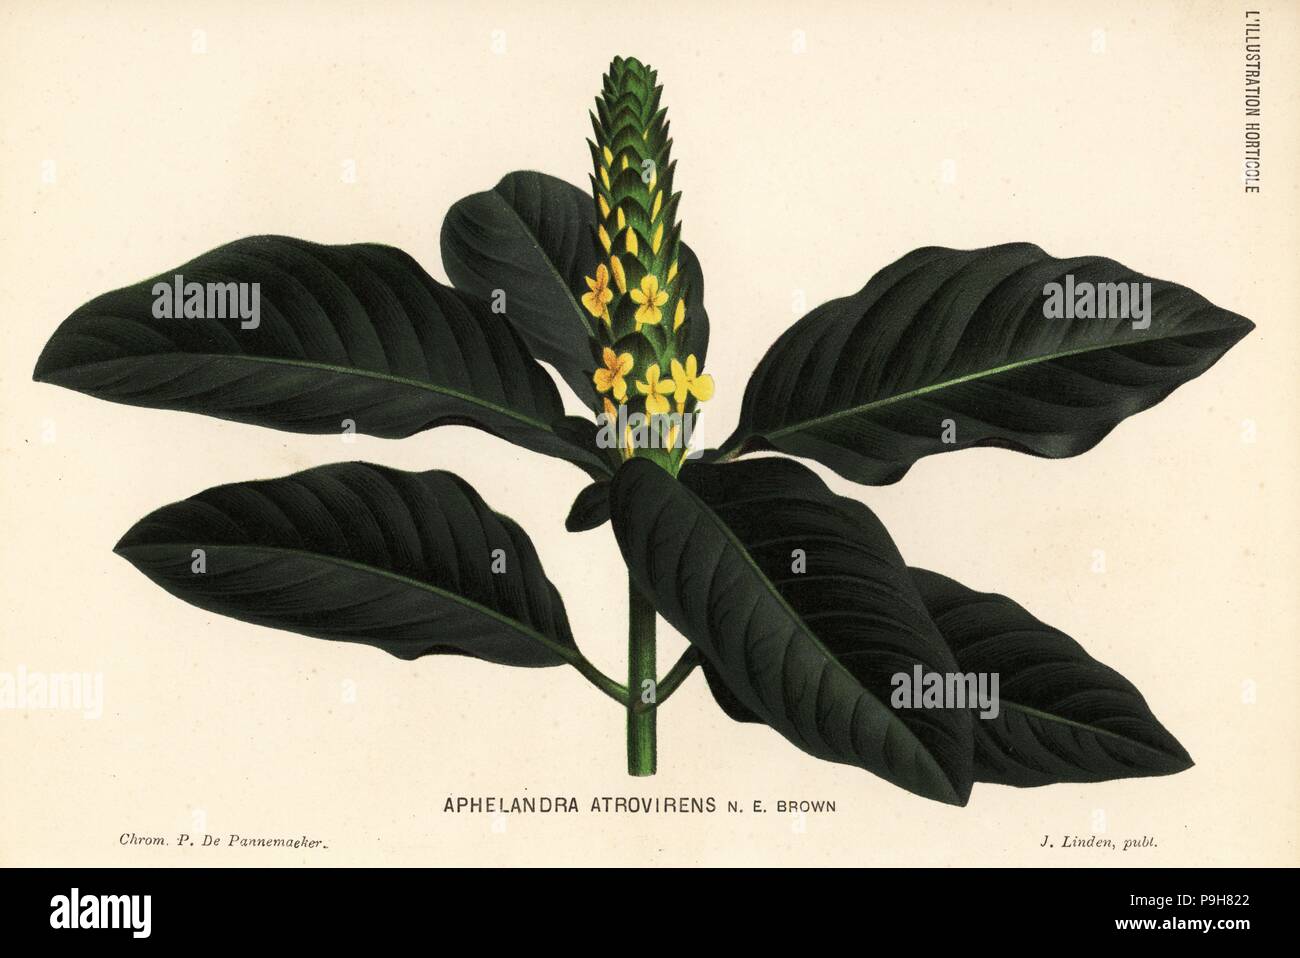 Aphelandra bahiensis (Aphelandra atrovirens). Chromolithograph by P. de Pannemaeker from Jean Linden's l'Illustration Horticole, Brussels, 1884. Stock Photo